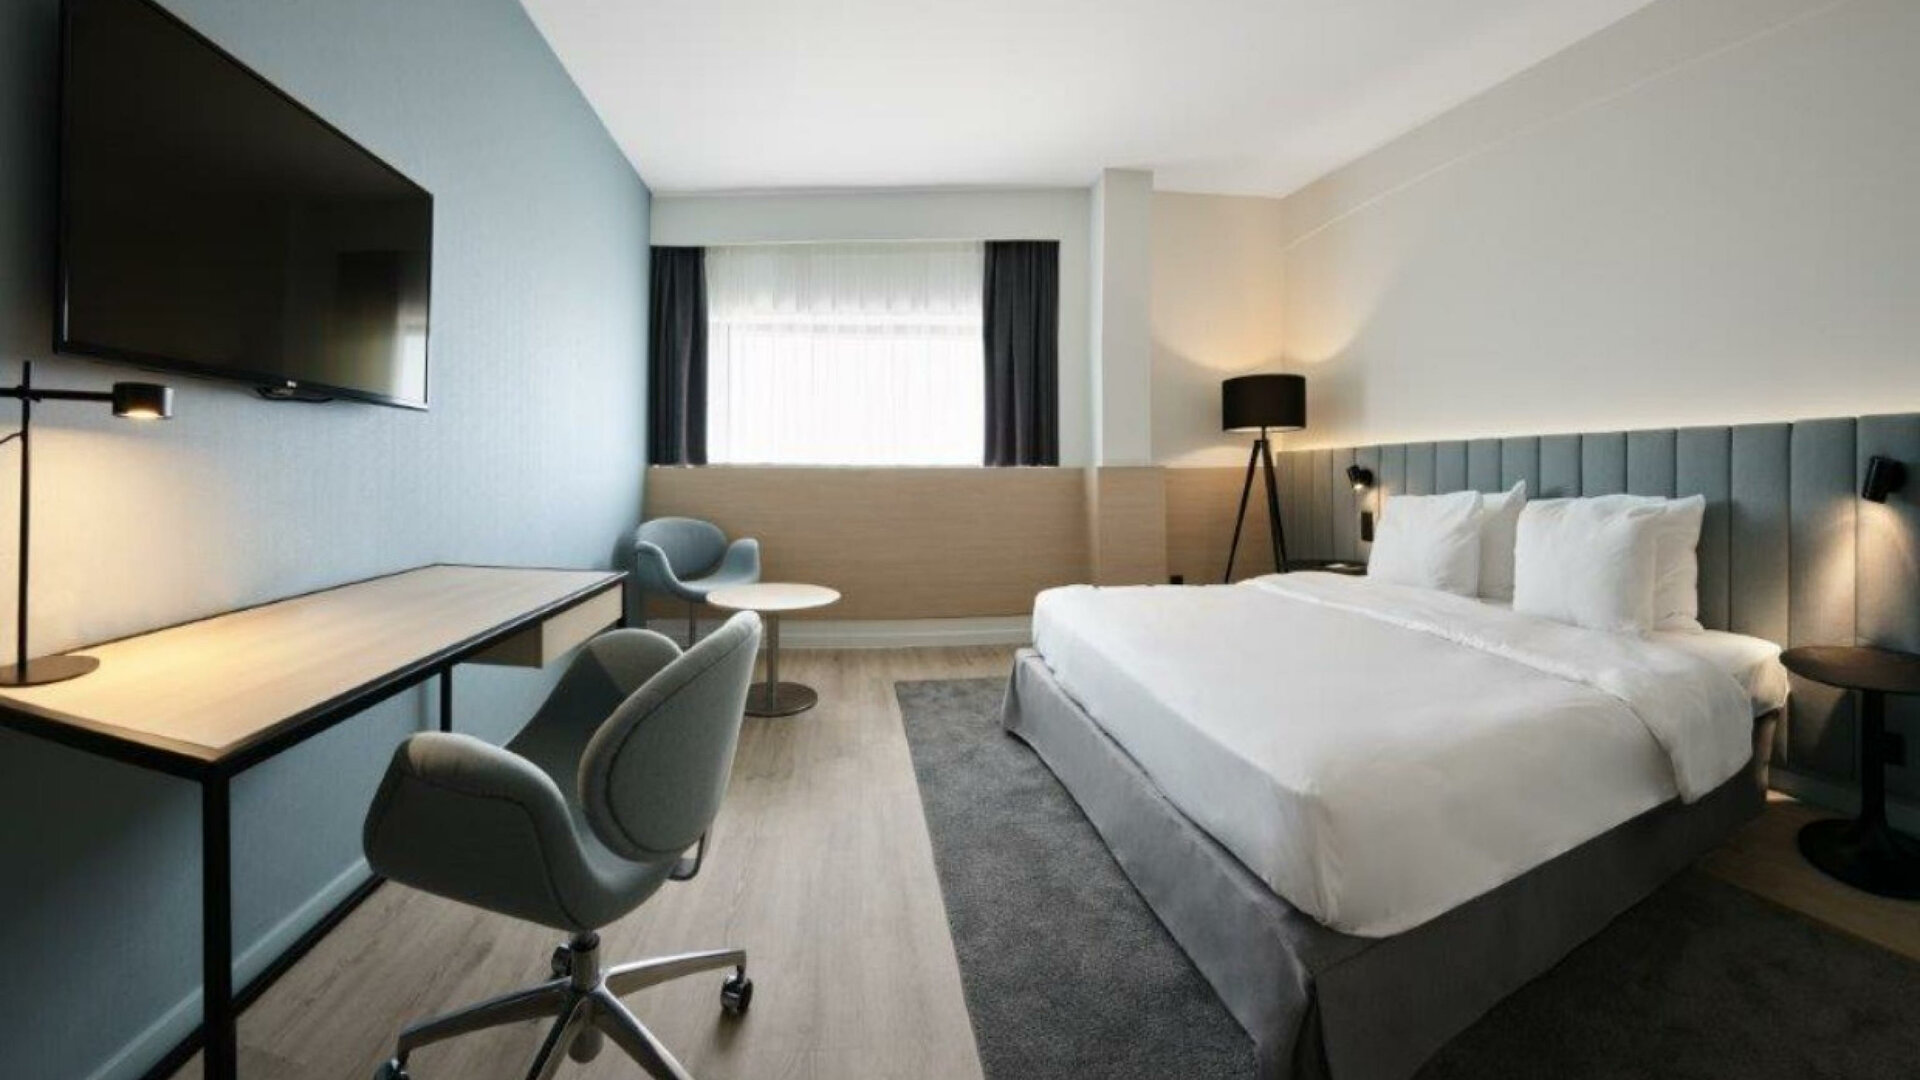 Radisson Blu Hotel, Hasselt - Hotel Room @ Radisson Blu Hotel, Hasselt